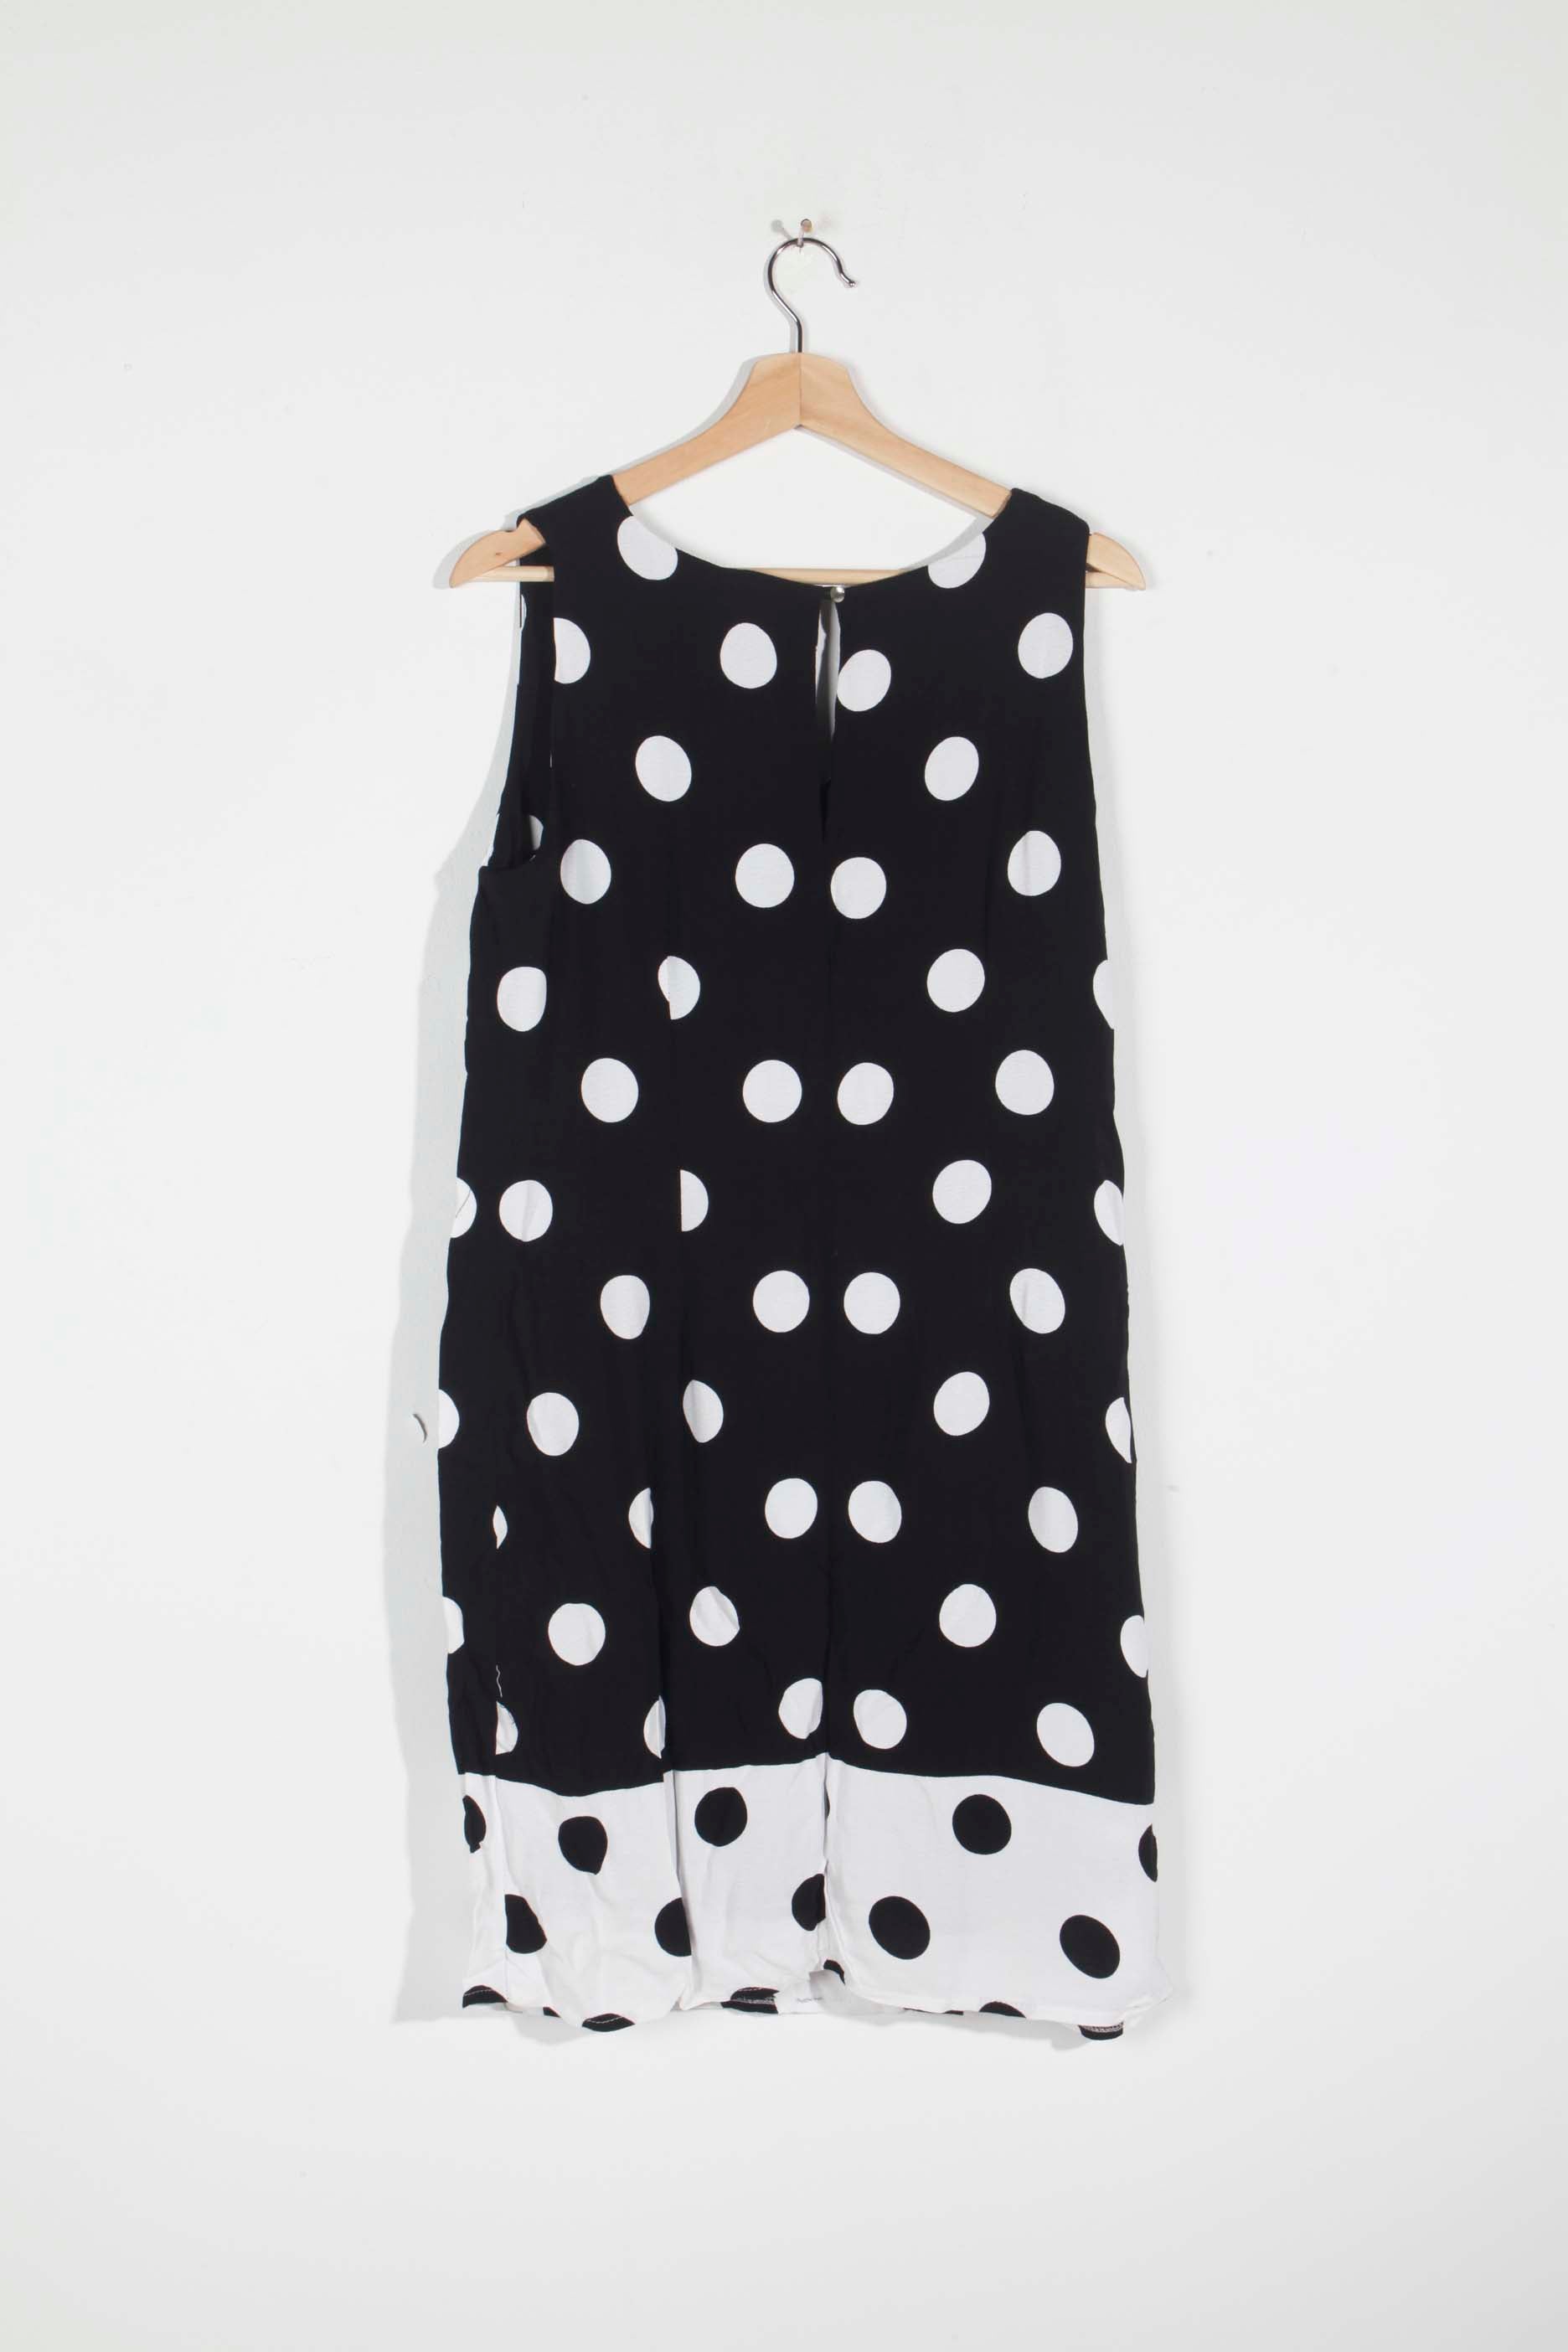 Black and White Polka Dot Dress (Eu38)